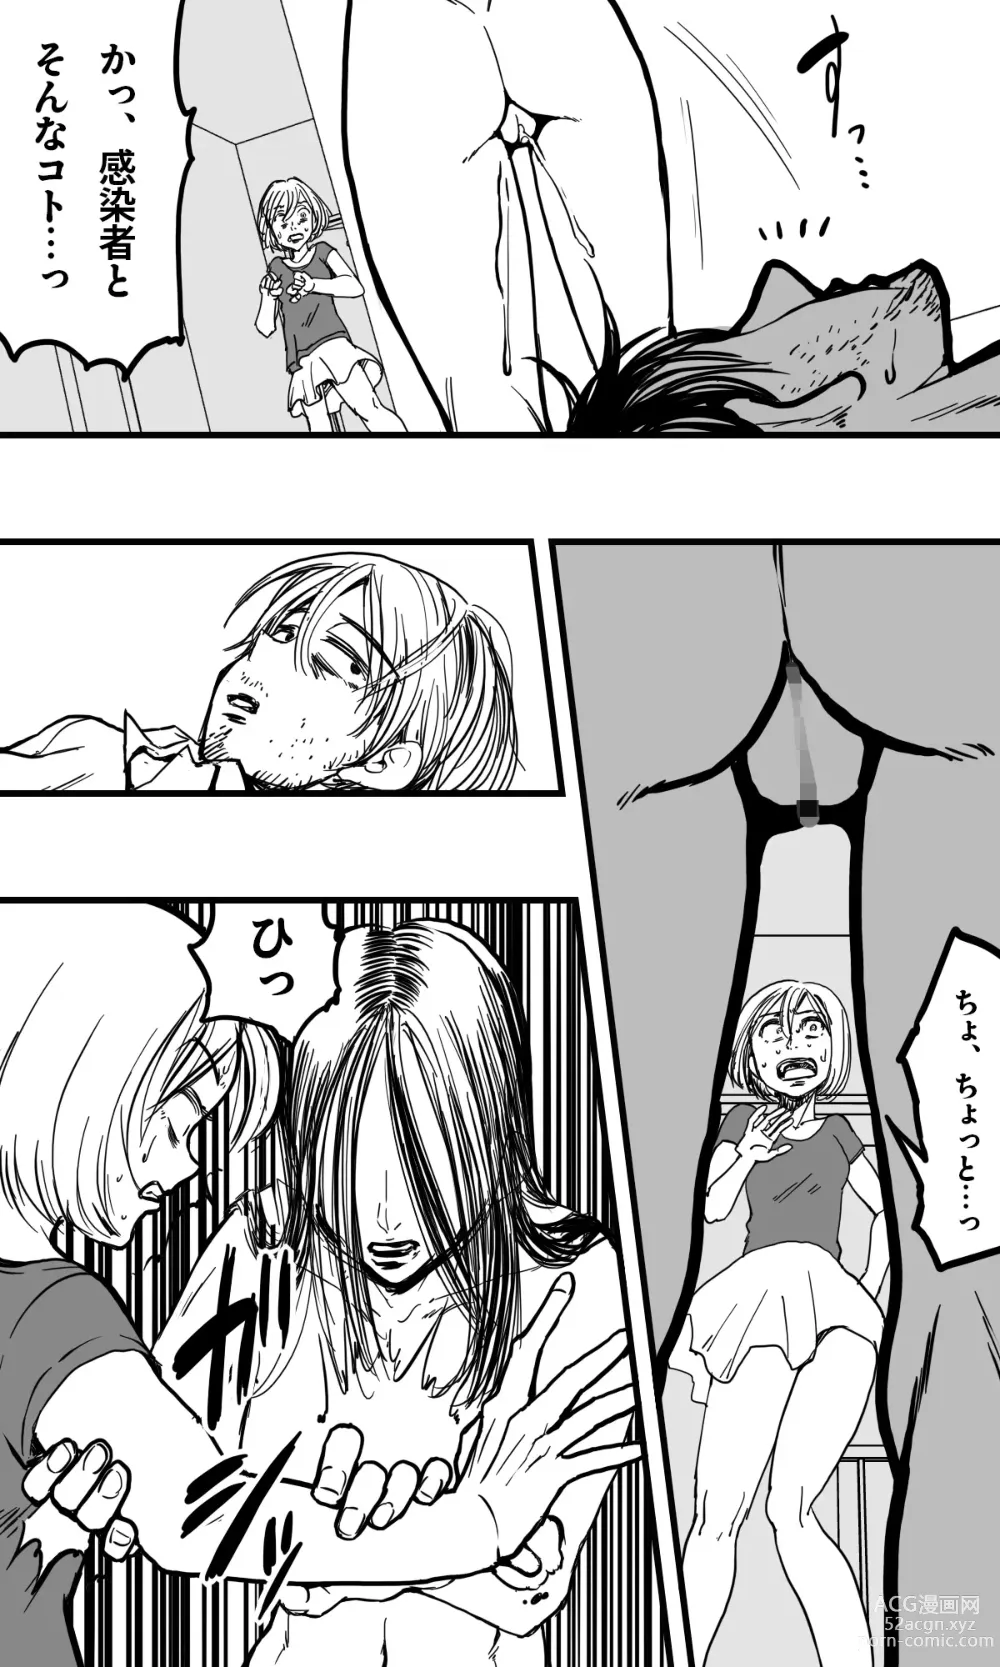 Page 42 of doujinshi POLMANGA_10